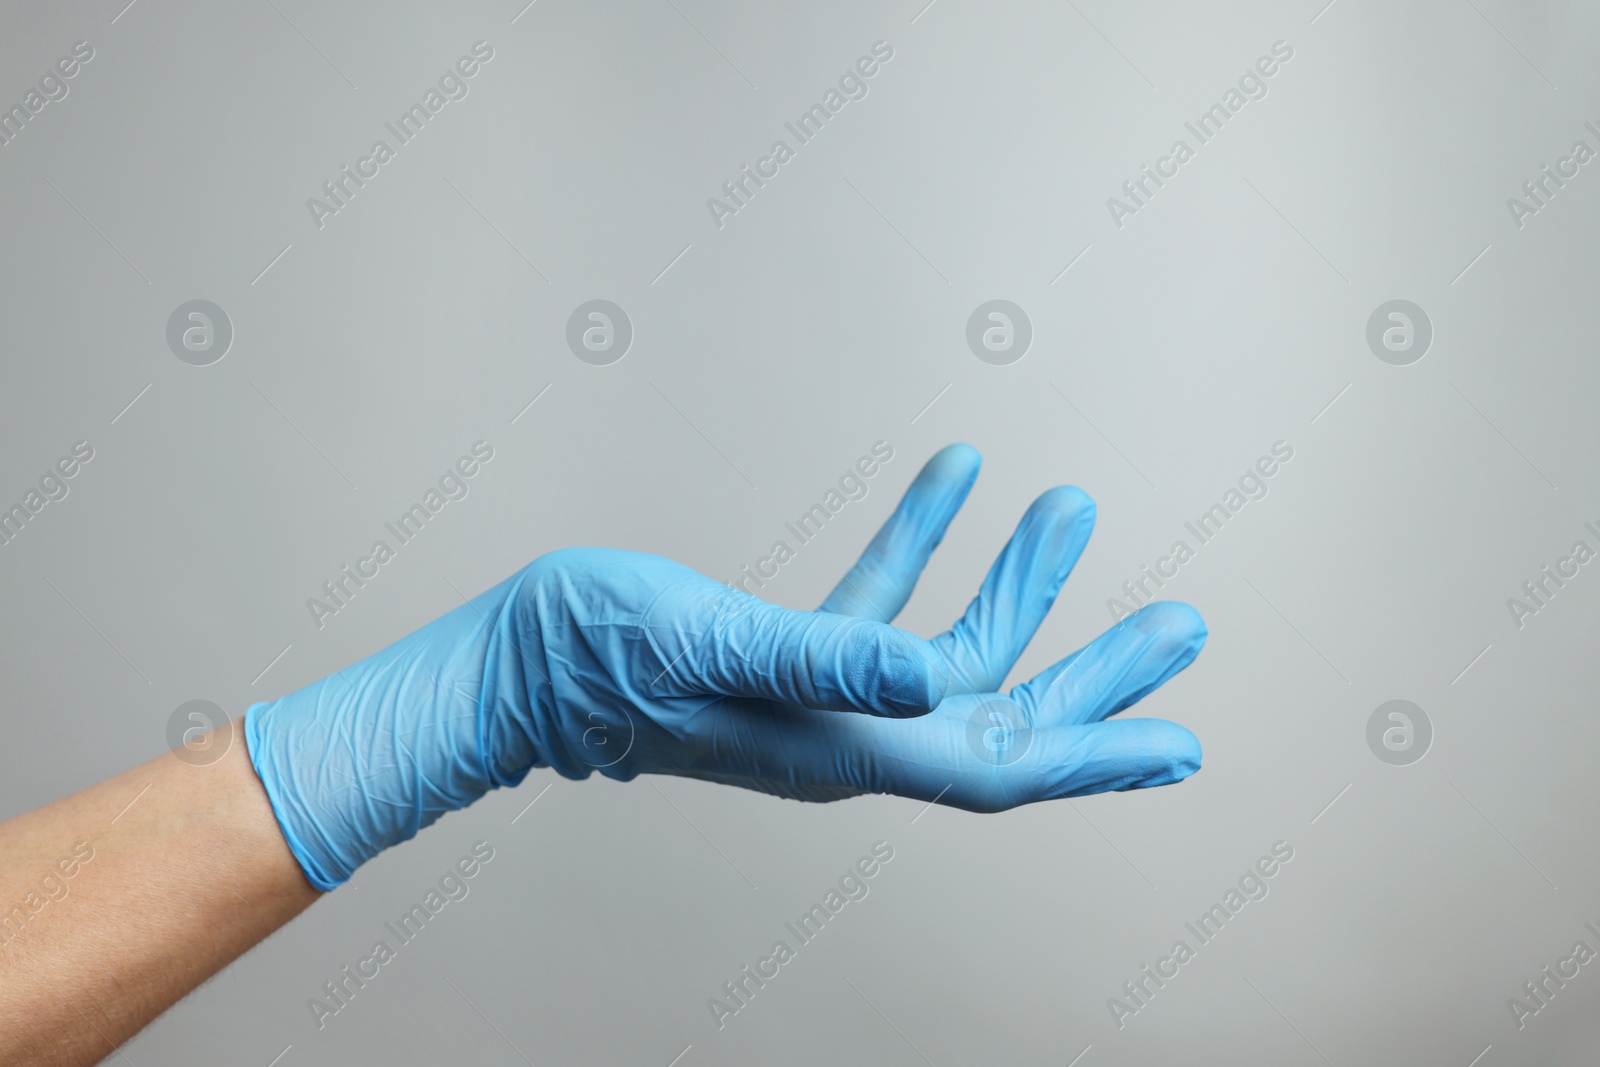 Photo of Doctor wearing light blue medical glove holding something on grey background, closeup